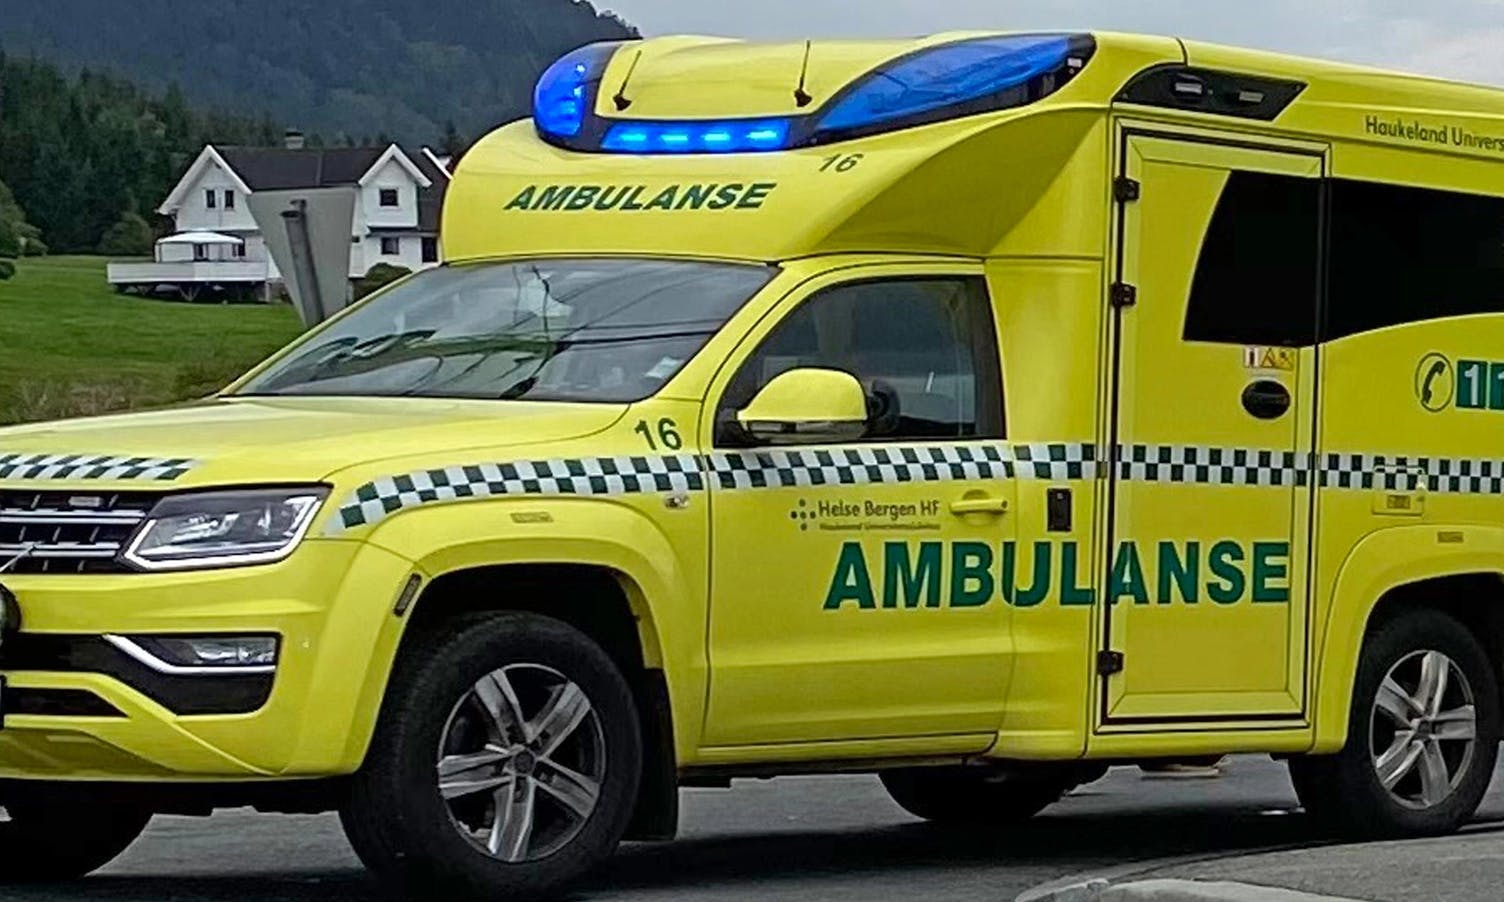 Ambulanse på utrykking køyrde på hjort